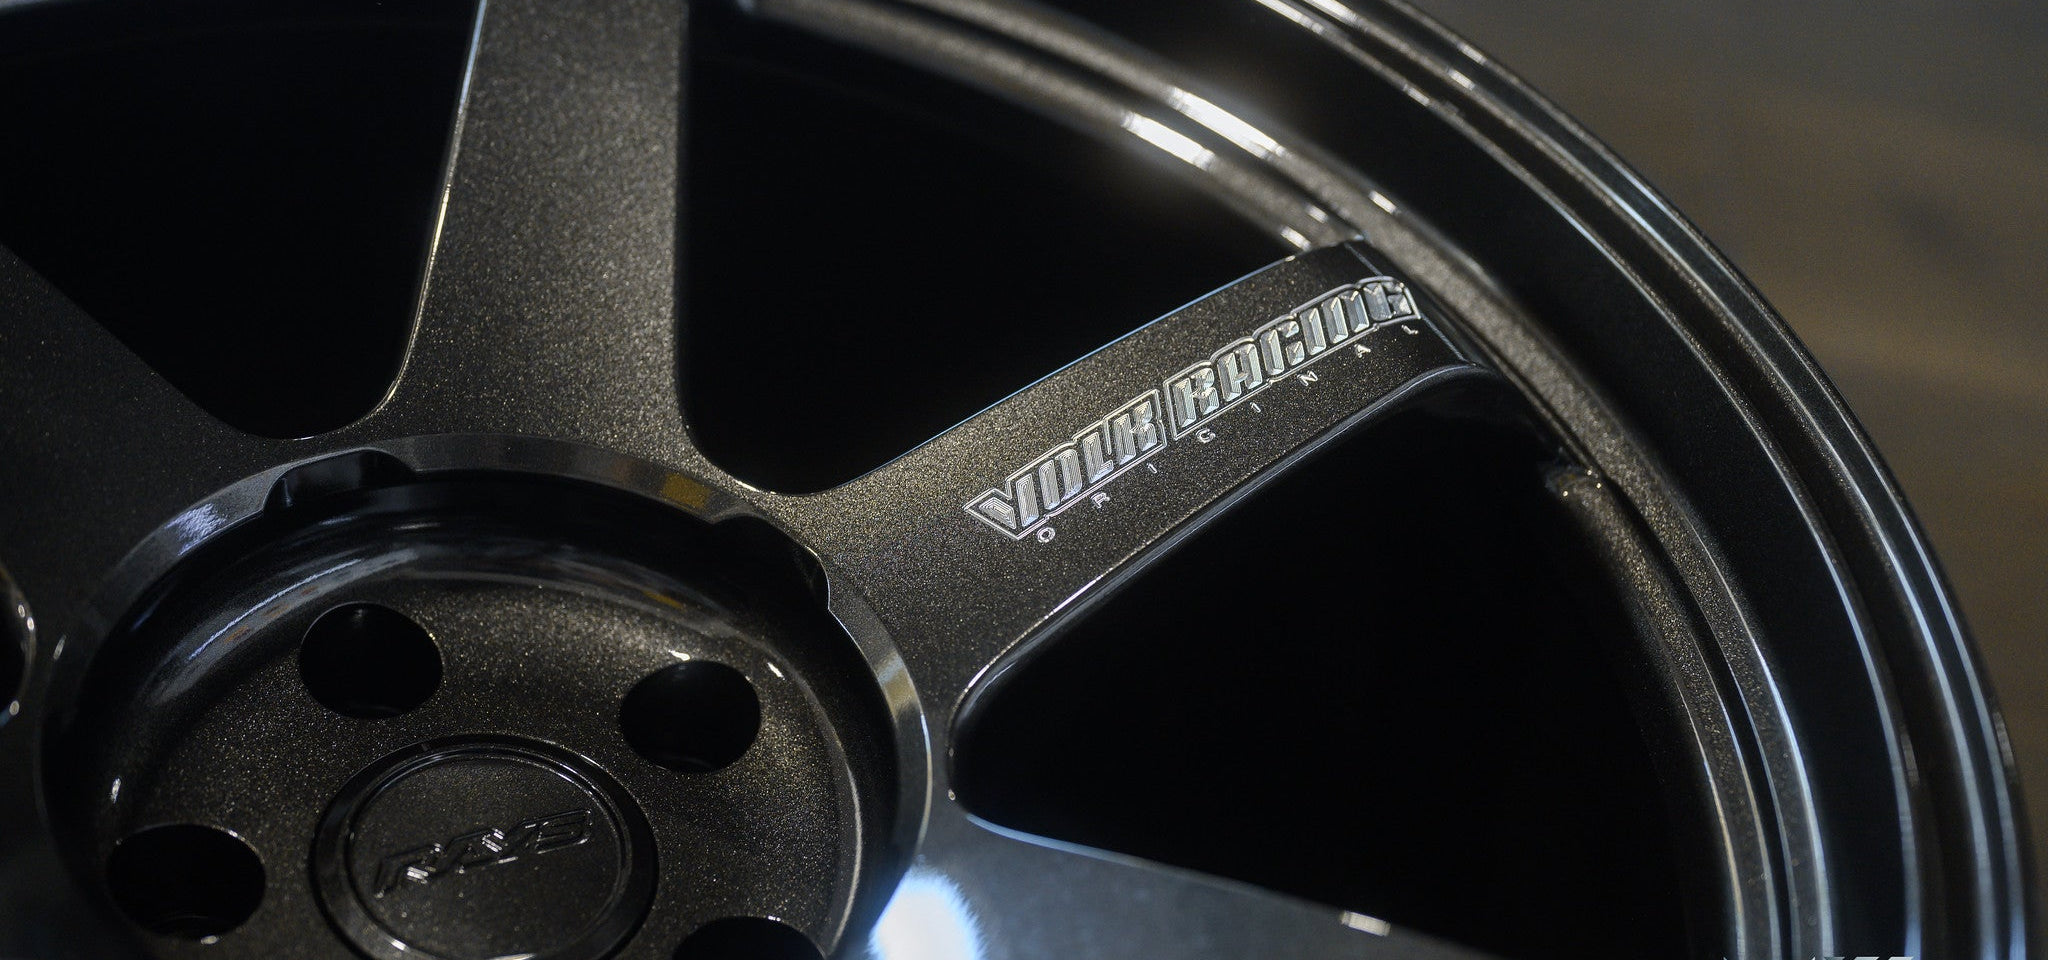 Volk Racing TE37 Ultra M-Spec R35 GT-R - Premium Wheels from Volk Racing - From just $6490.00! Shop now at MK MOTORSPORTS